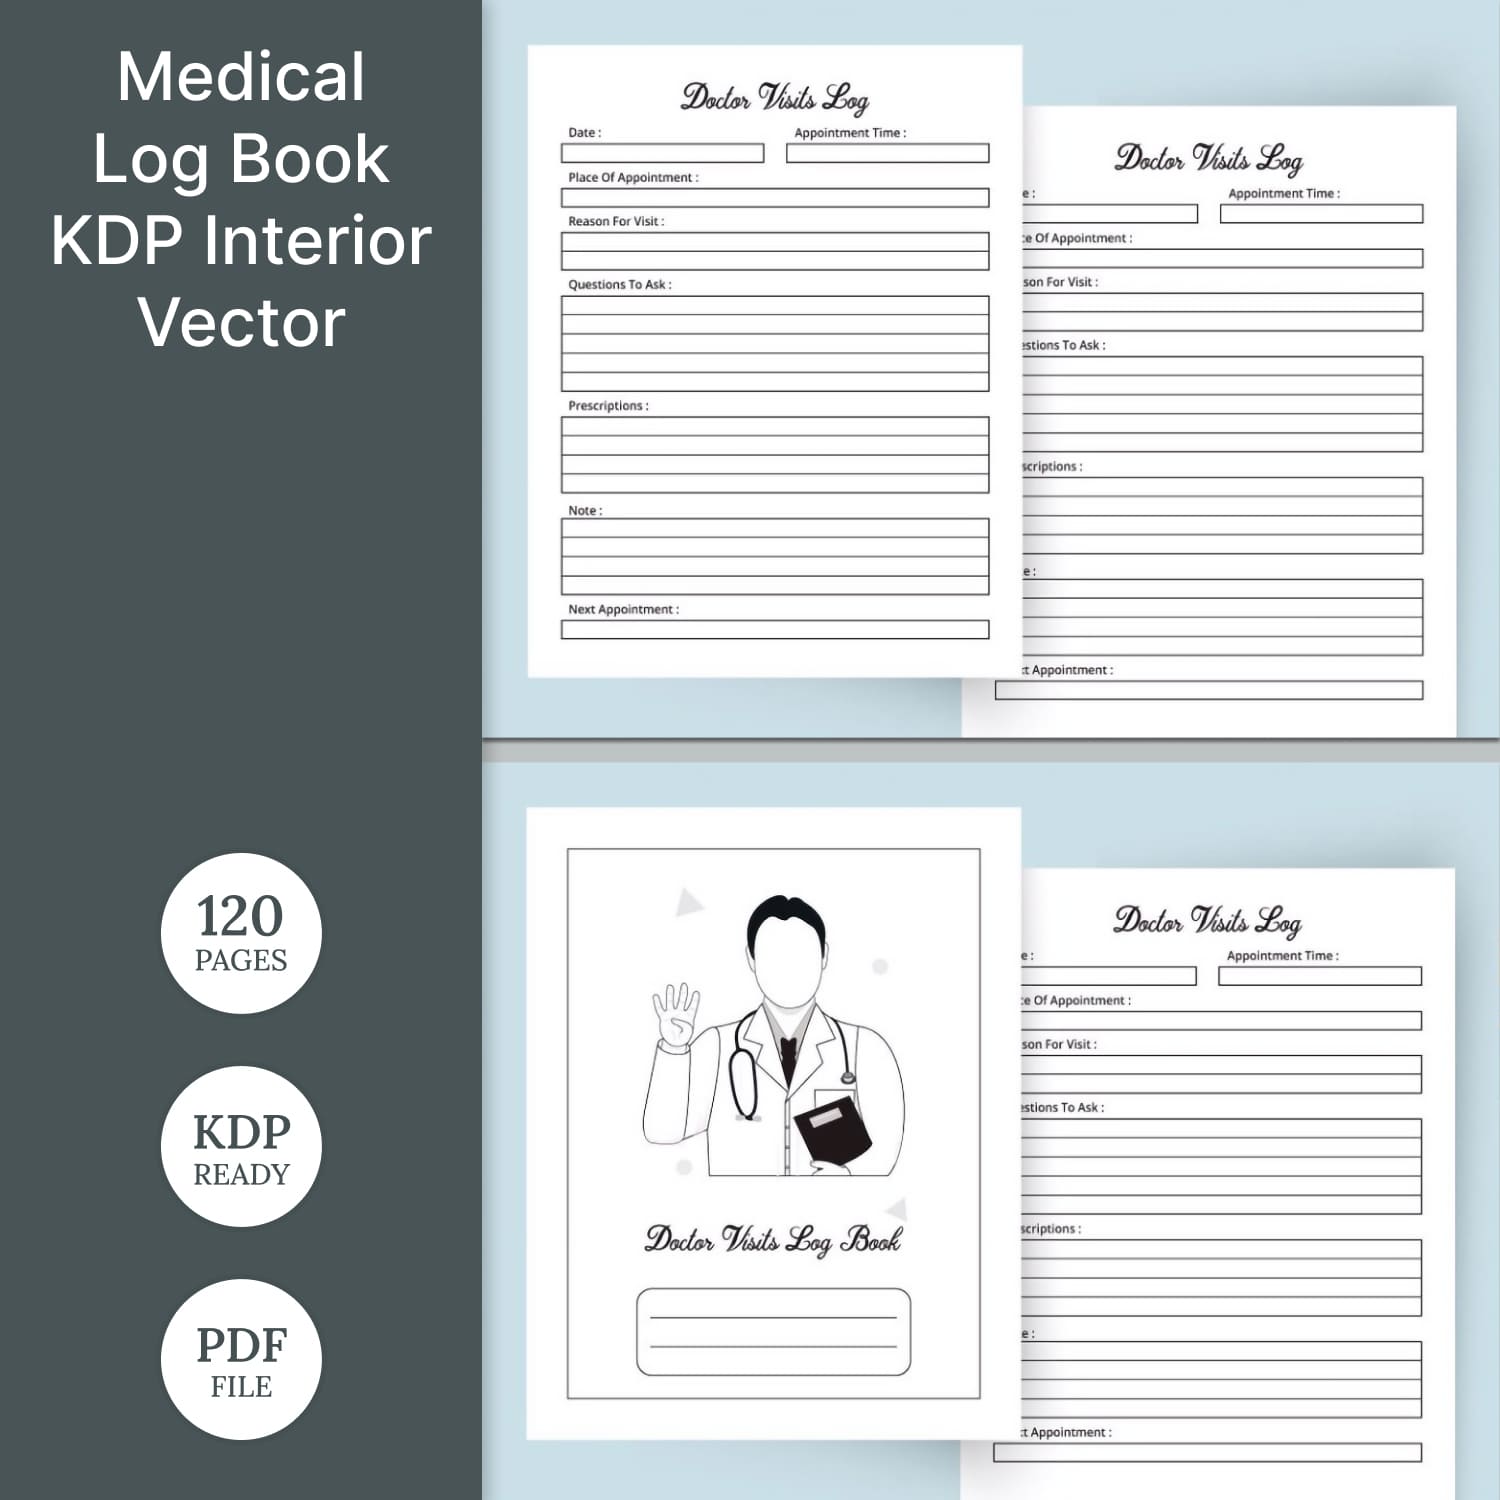 Medical log book KDP interior vector - main image preview.